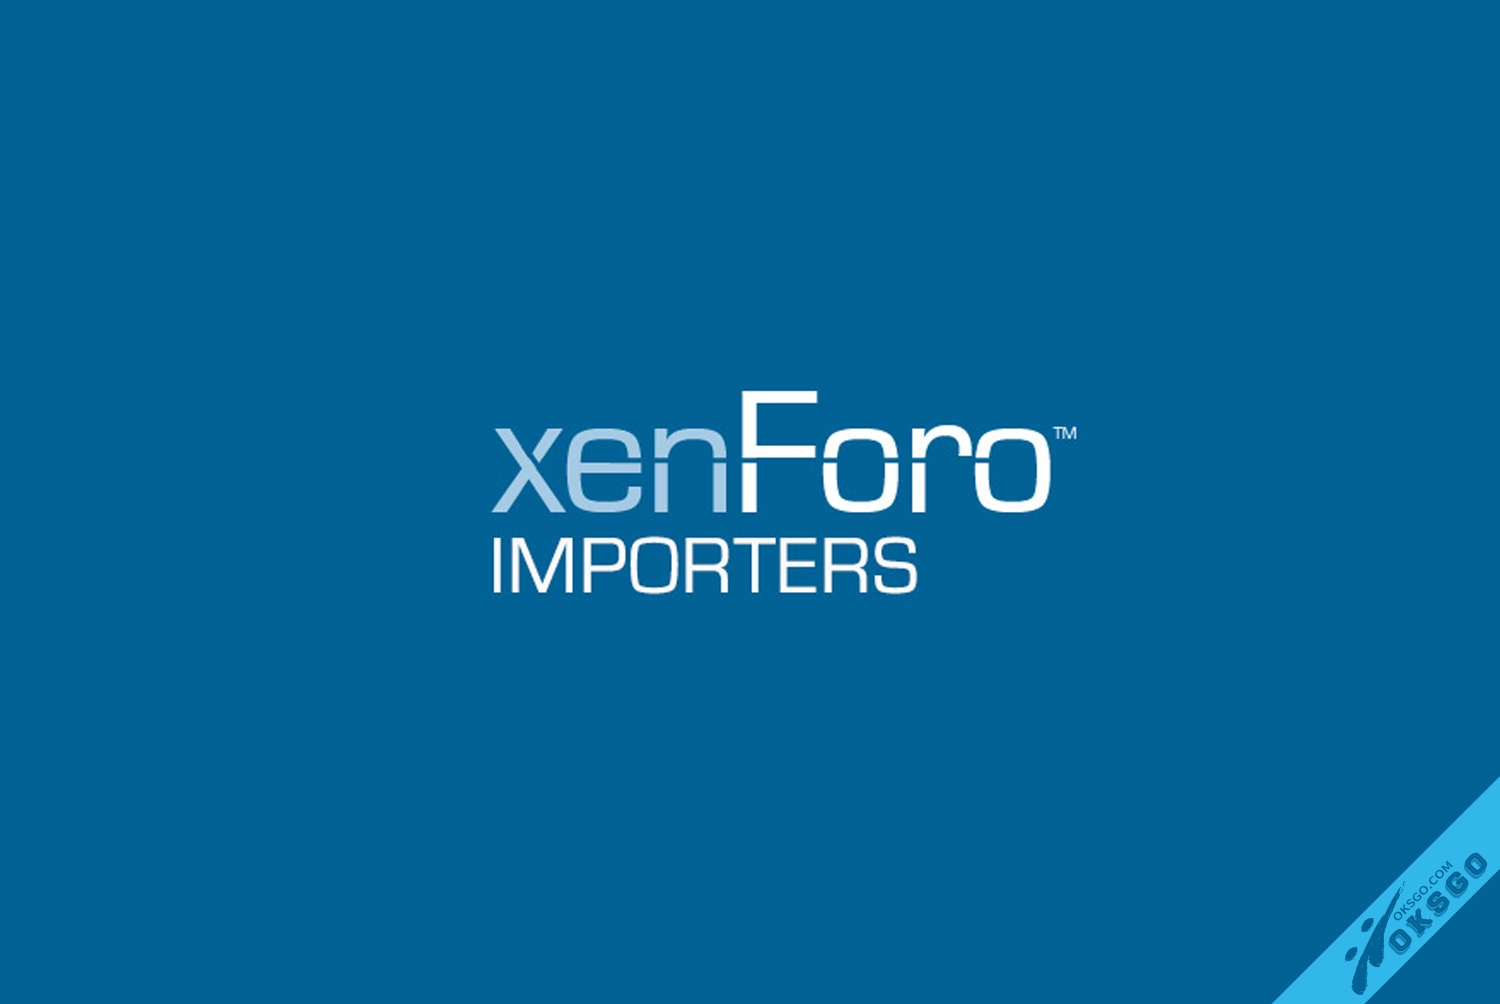 xenforo_importers.jpg